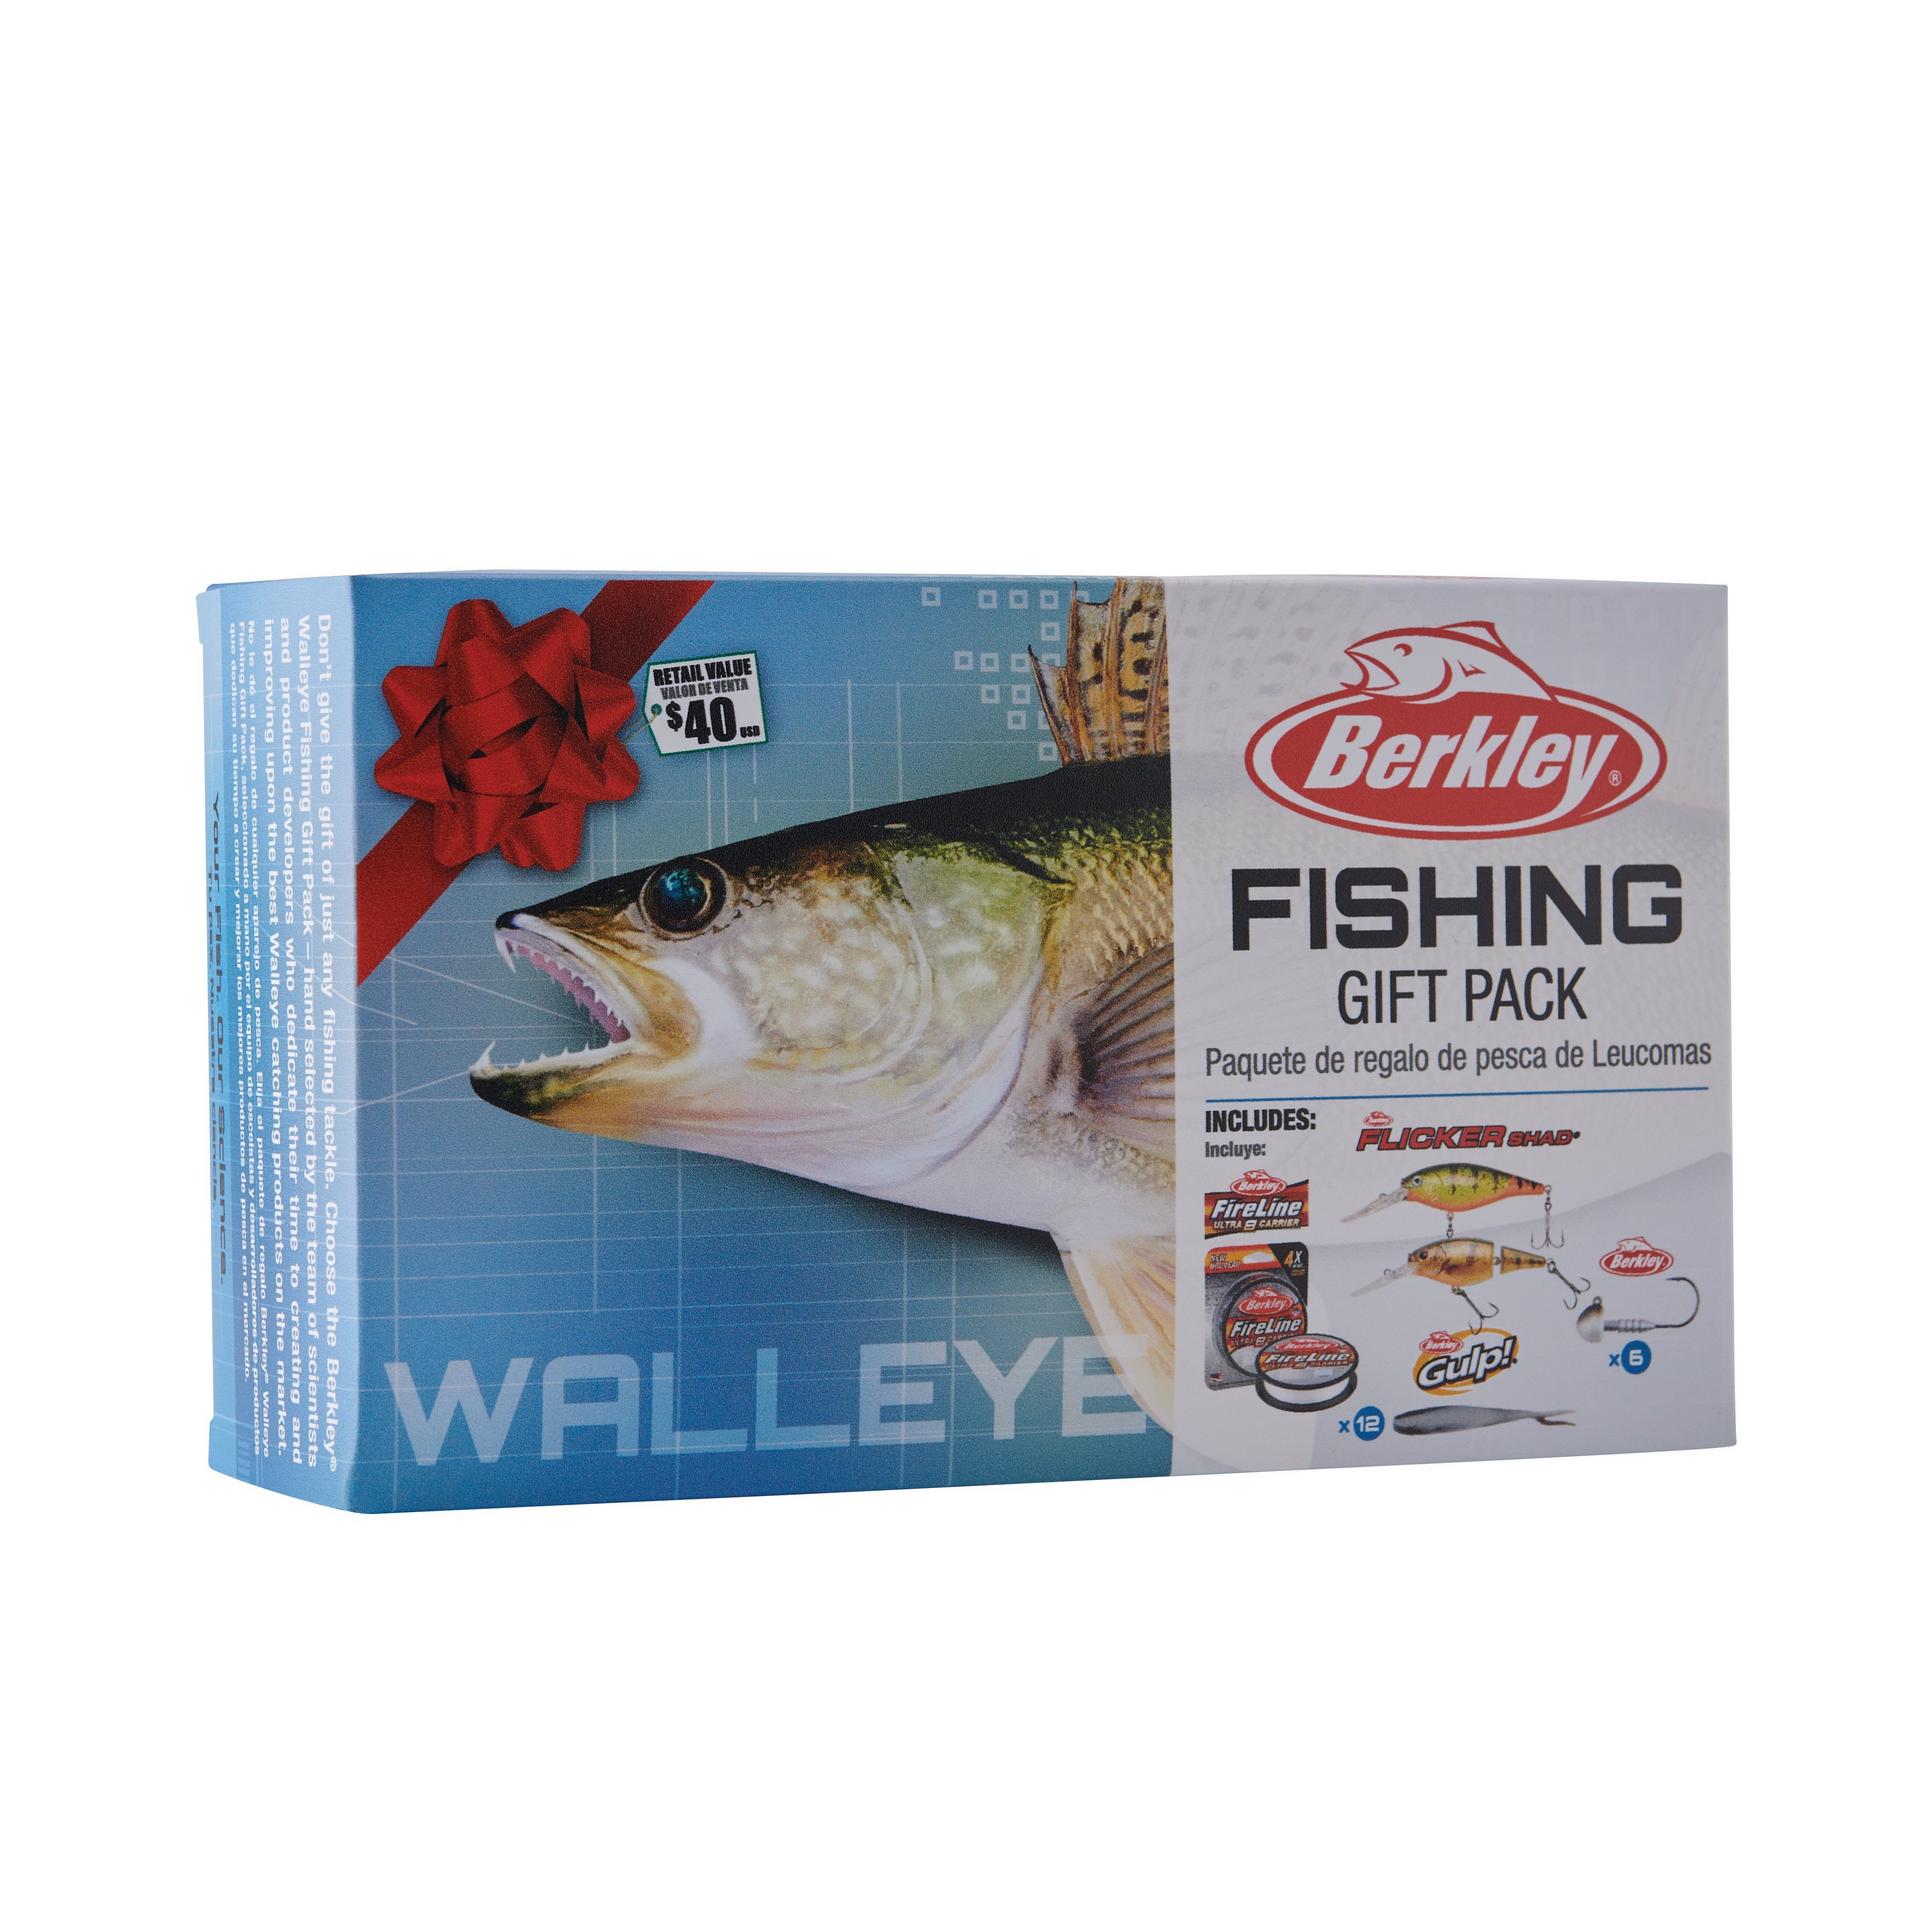 Berkley Fishing Gift Pack Walleye 2020 alt1 | Berkley Fishing